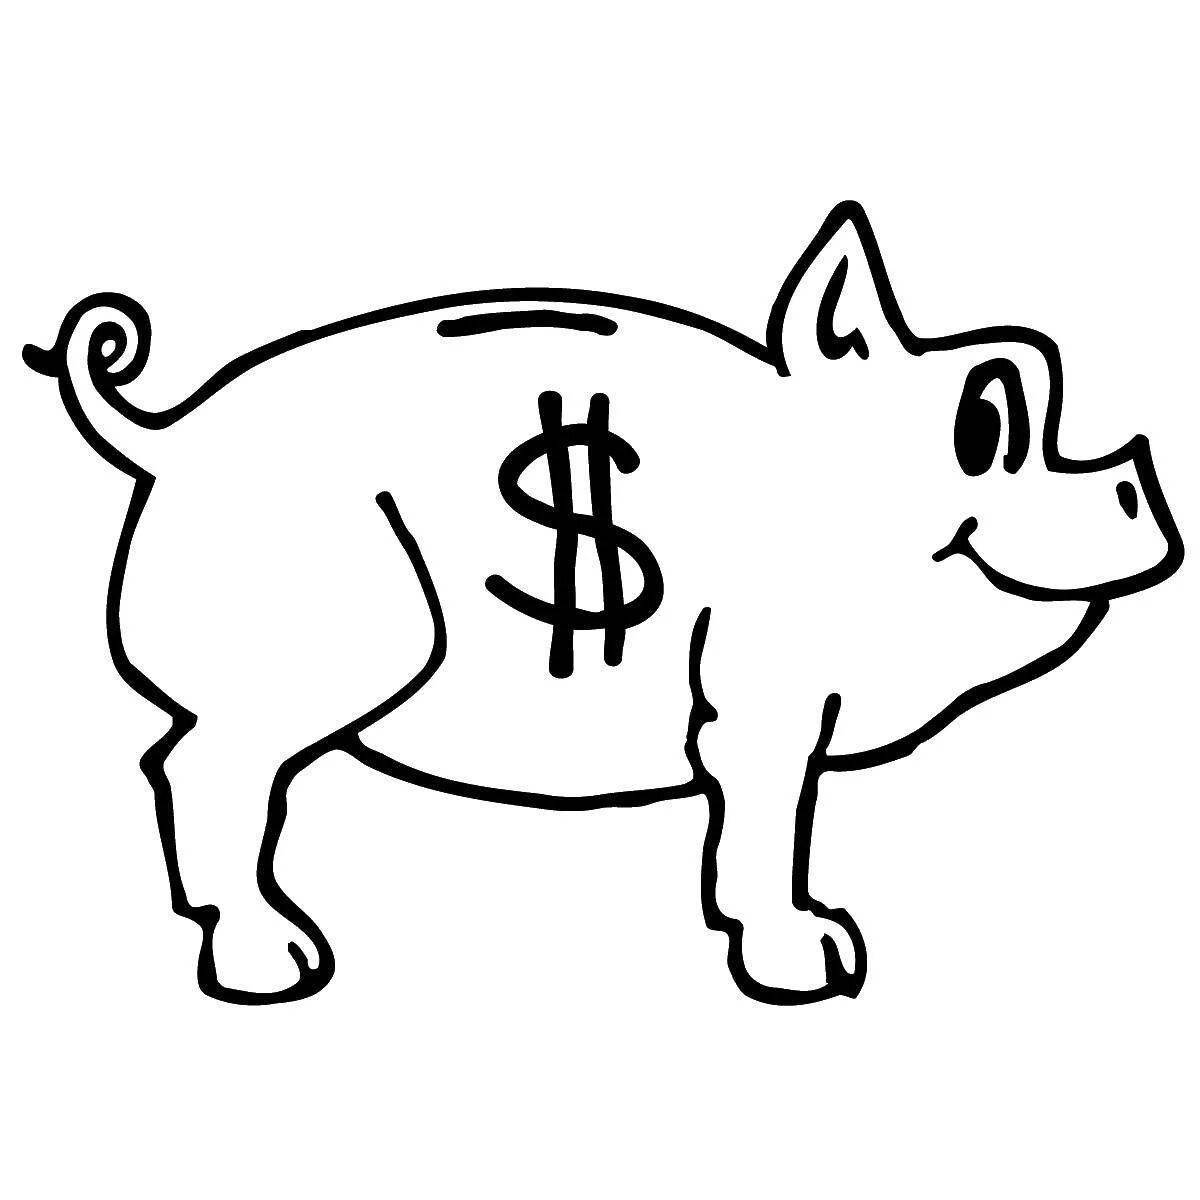 Sweet piggy bank coloring book